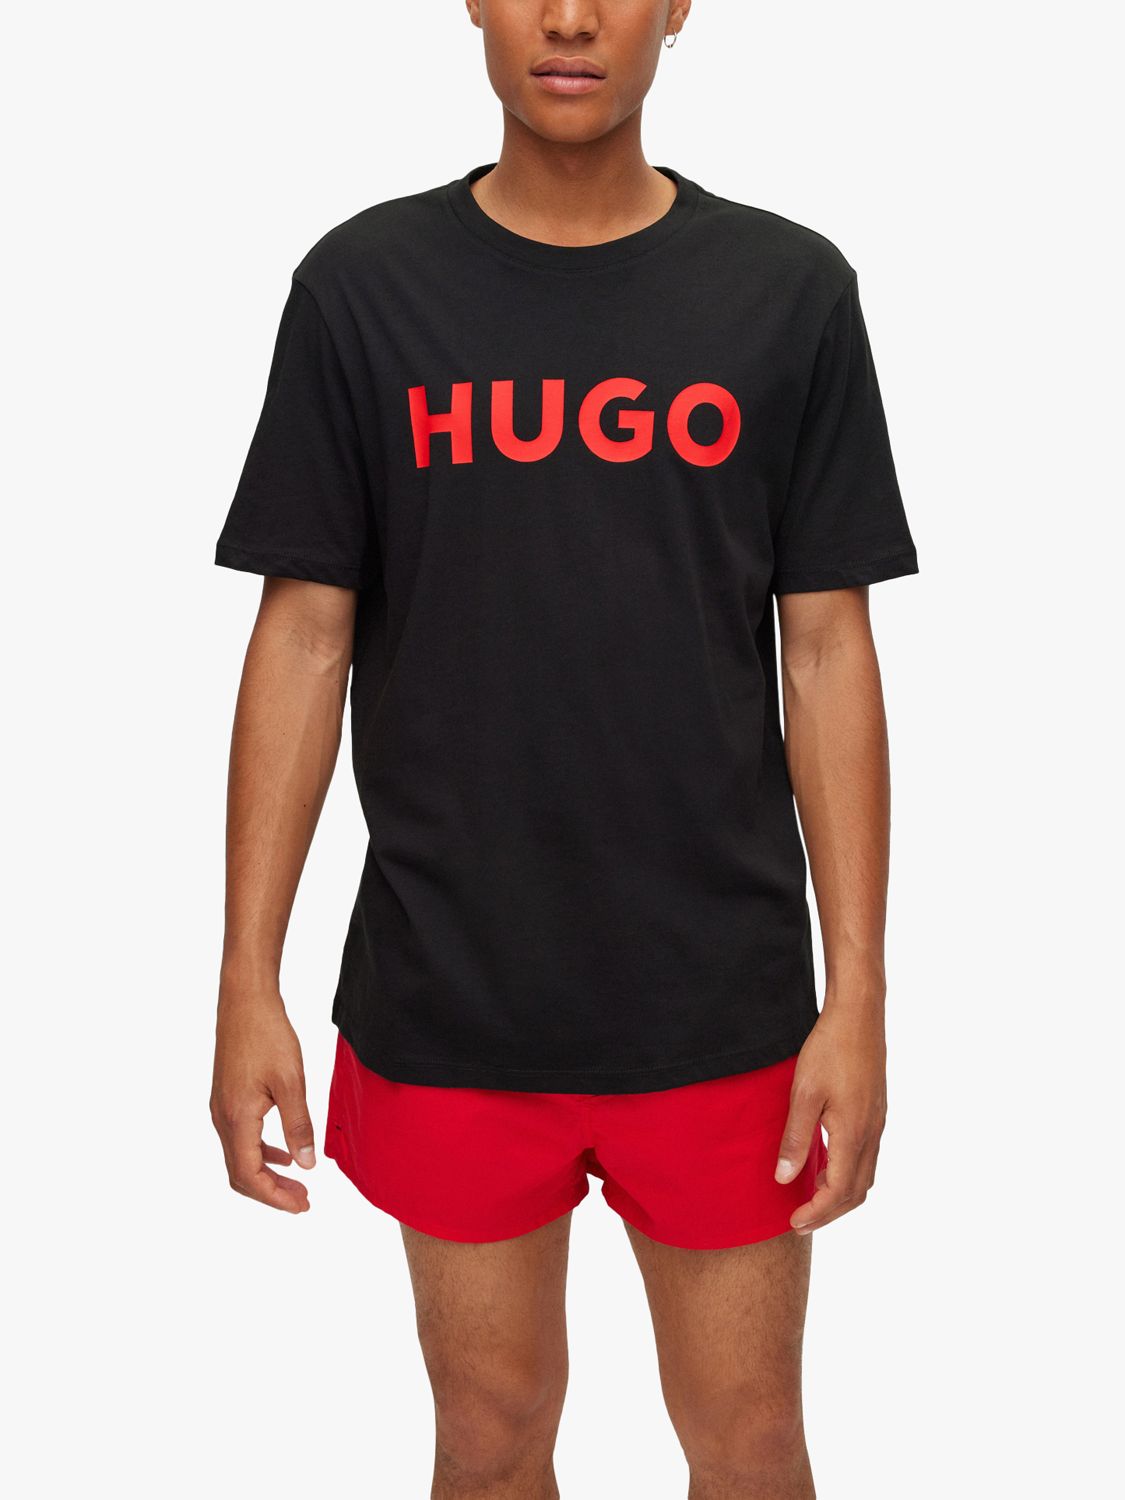 HUGO Dulivio Logo T-Shirt, Black, L